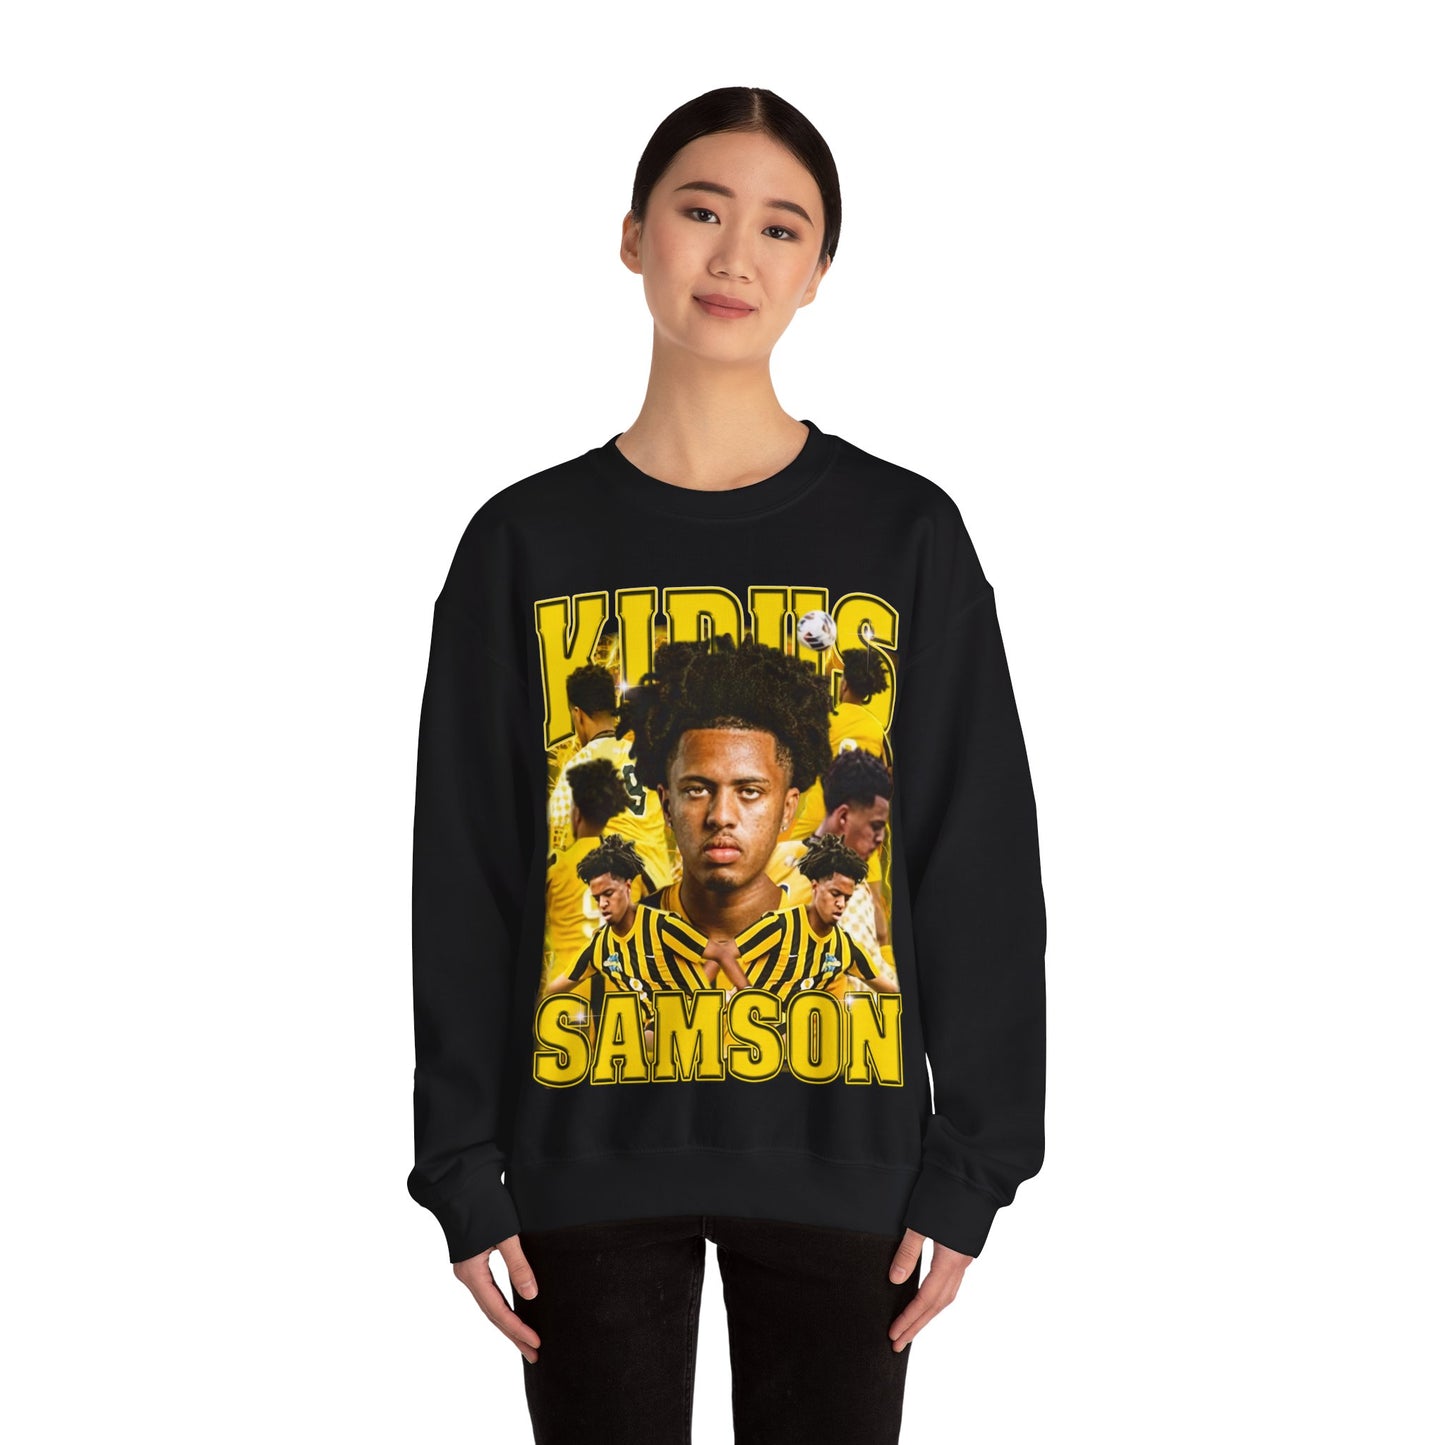 Kidus Samson Crewneck Sweatshirt